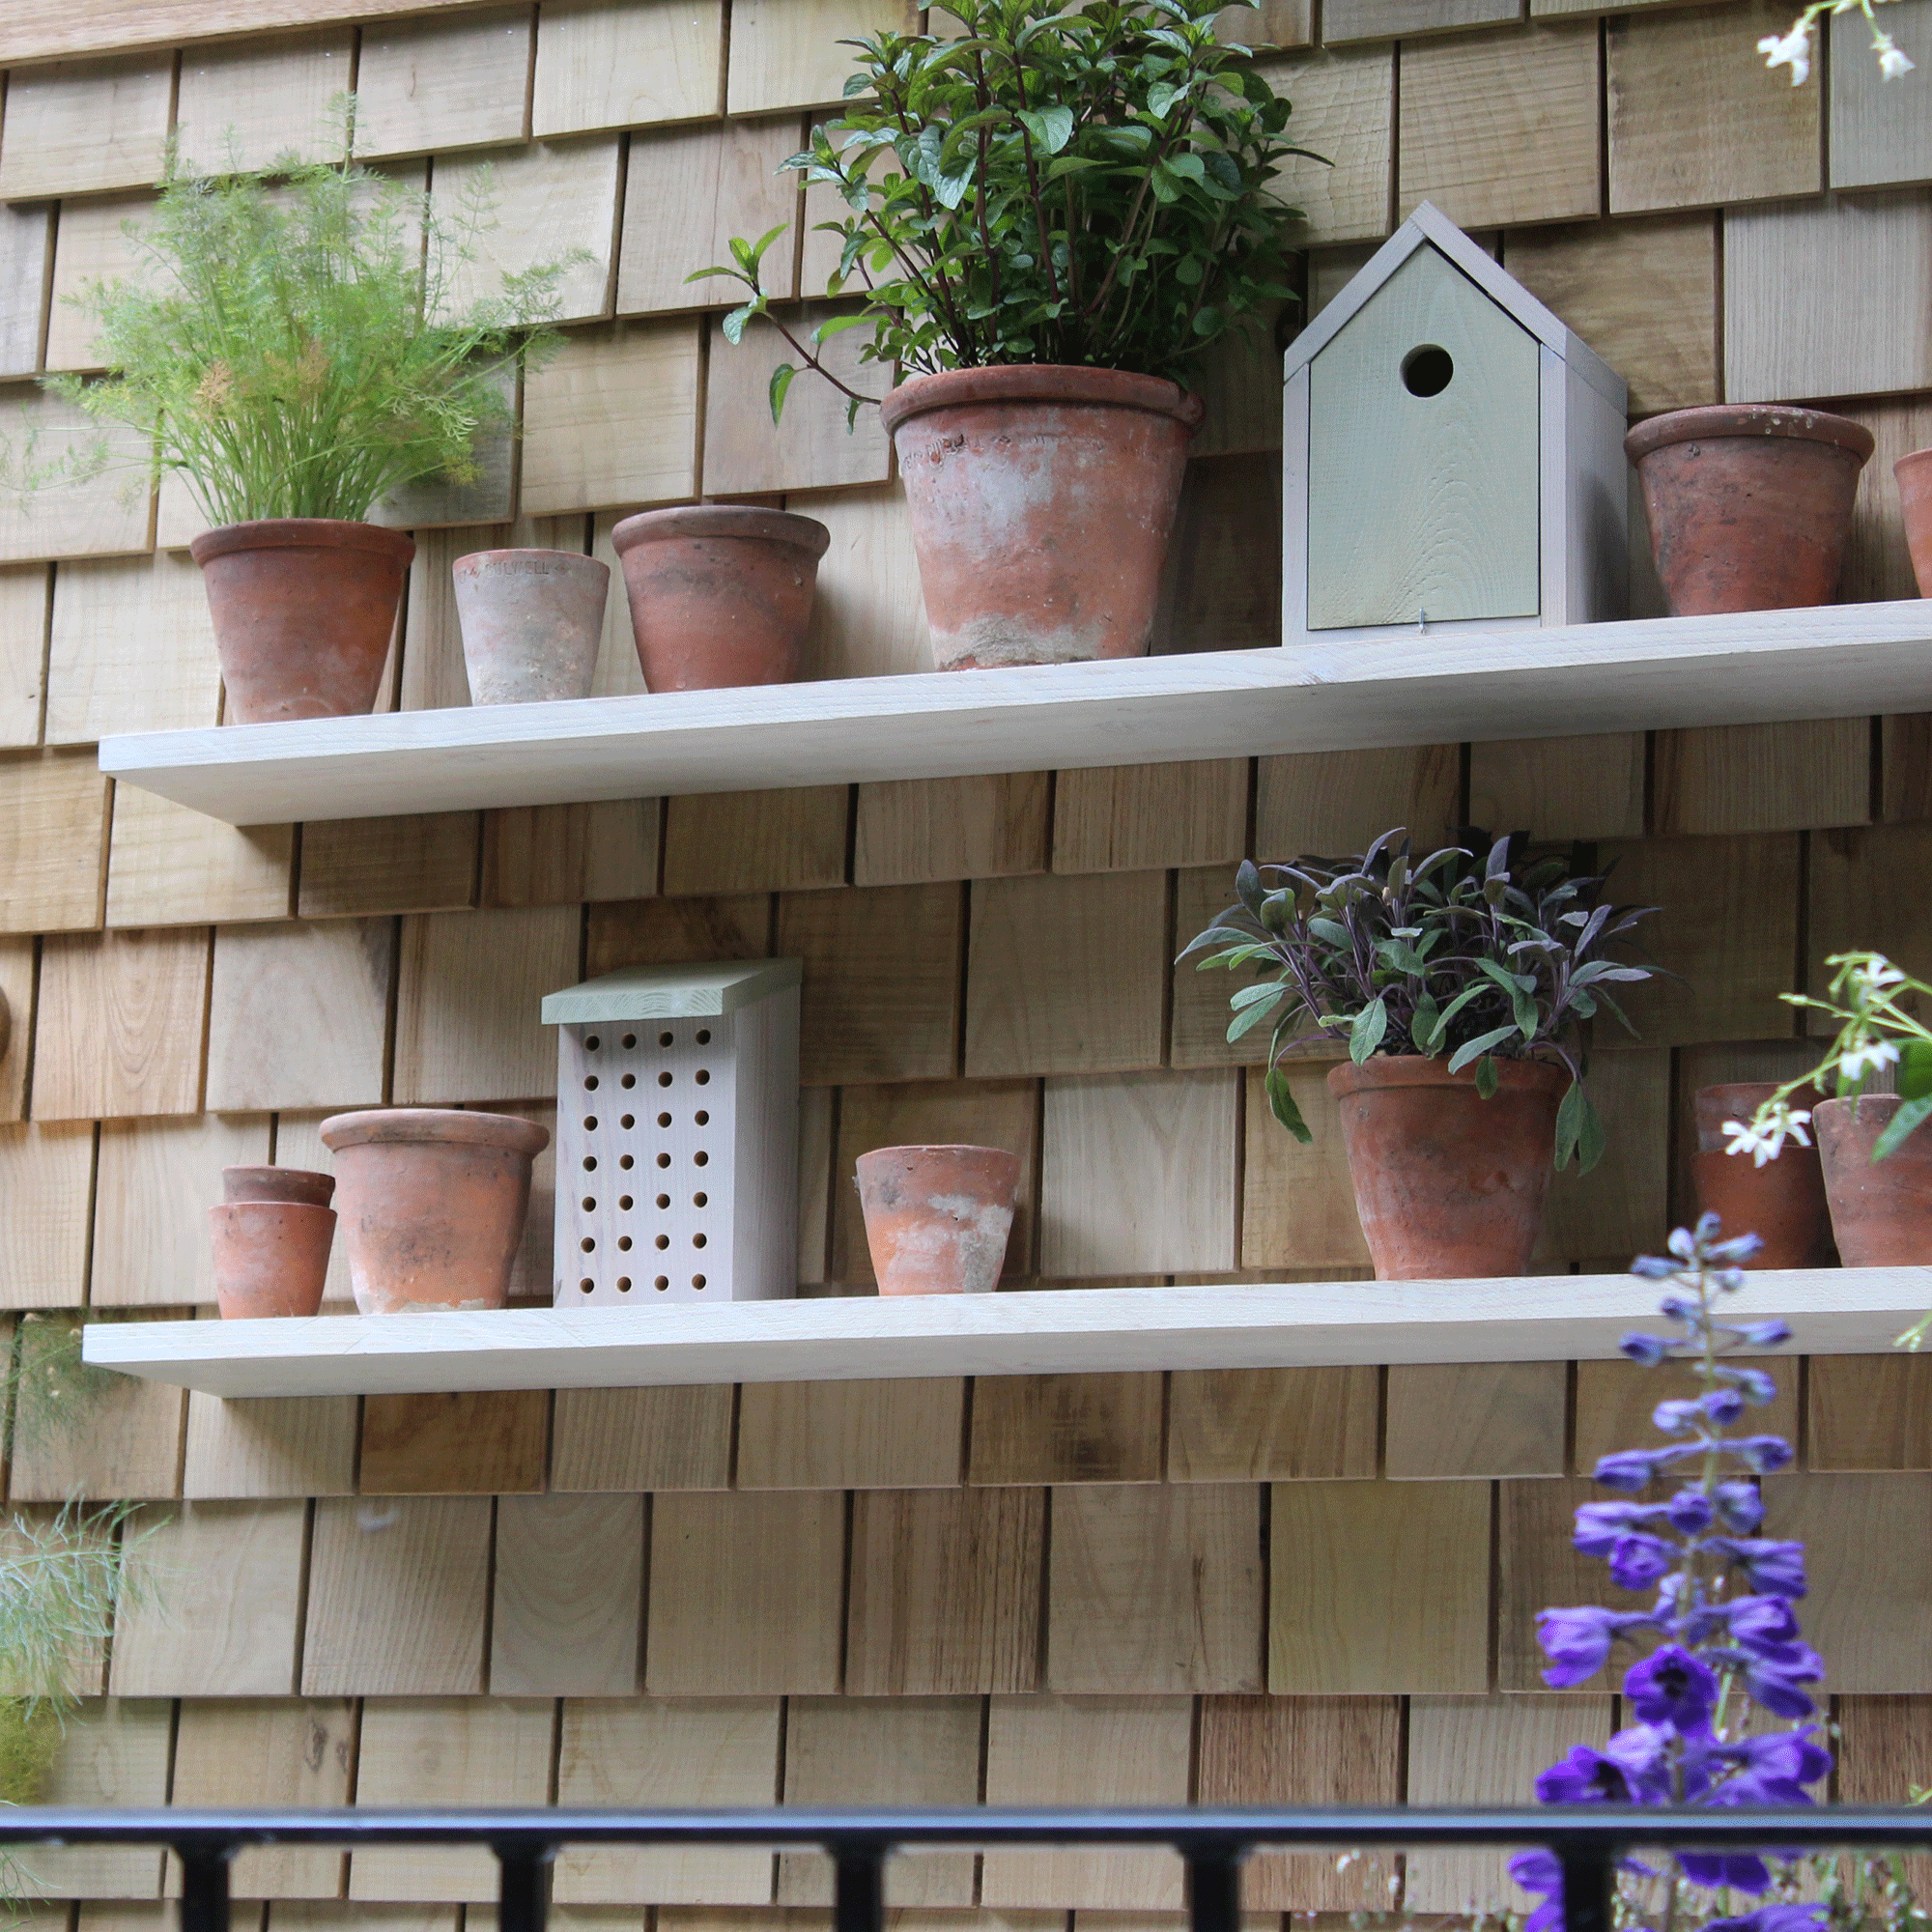 Shelves with terracotta pots